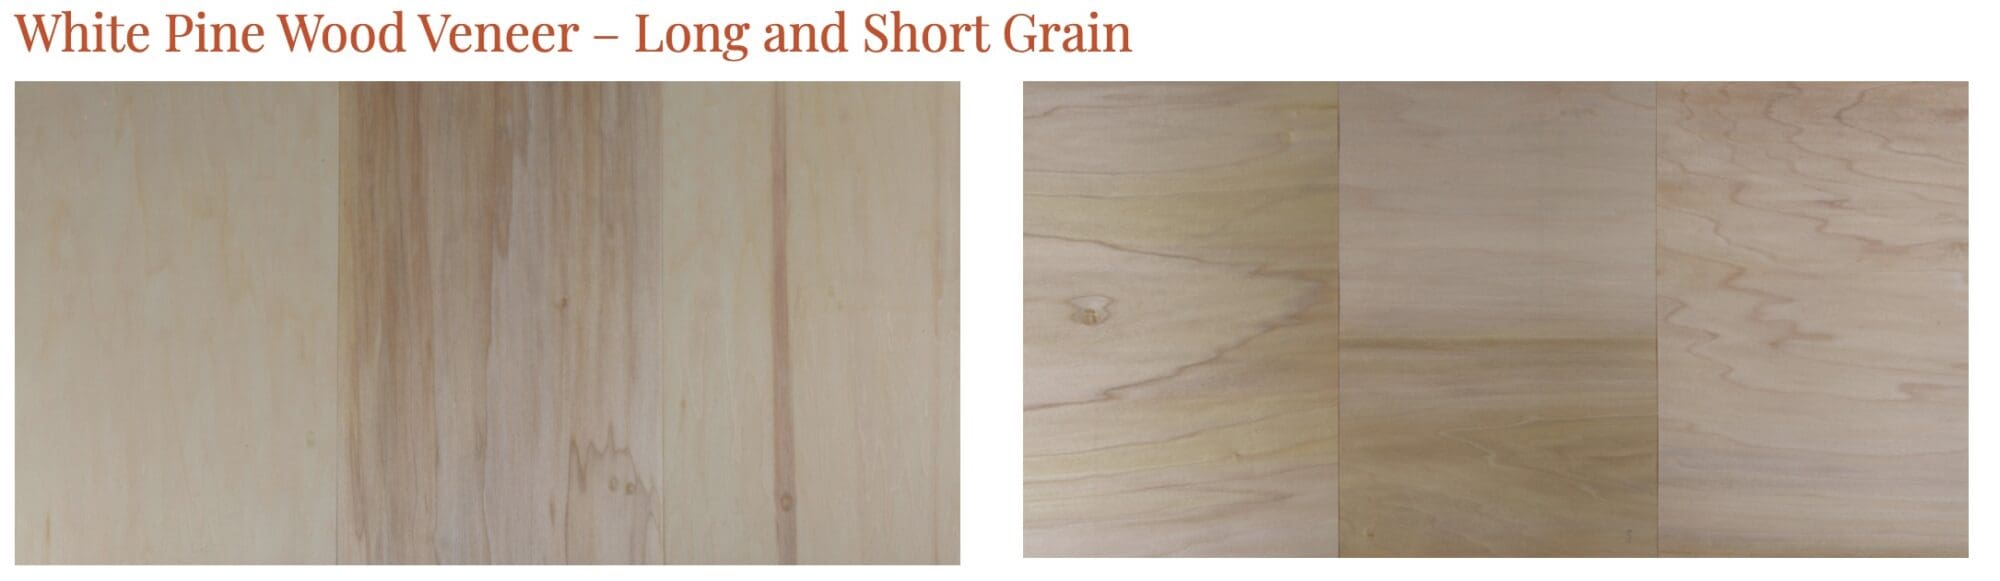 White Pine Wood Veneer Long and Short Grain